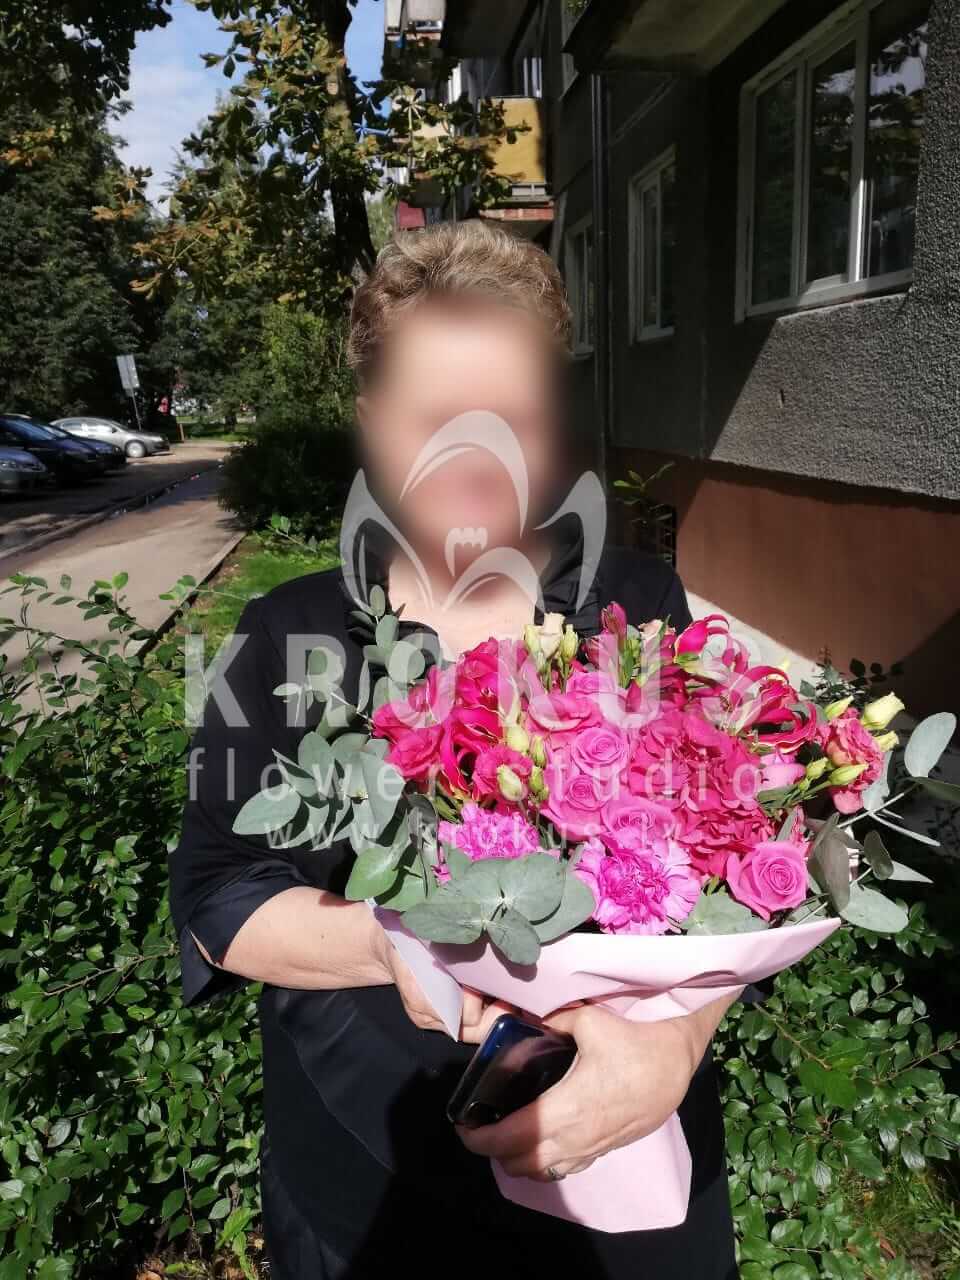 Ziedu piegāde Latvia Rīga (celozijarozā rozeseikaliptsbuvardijahortenzijas)